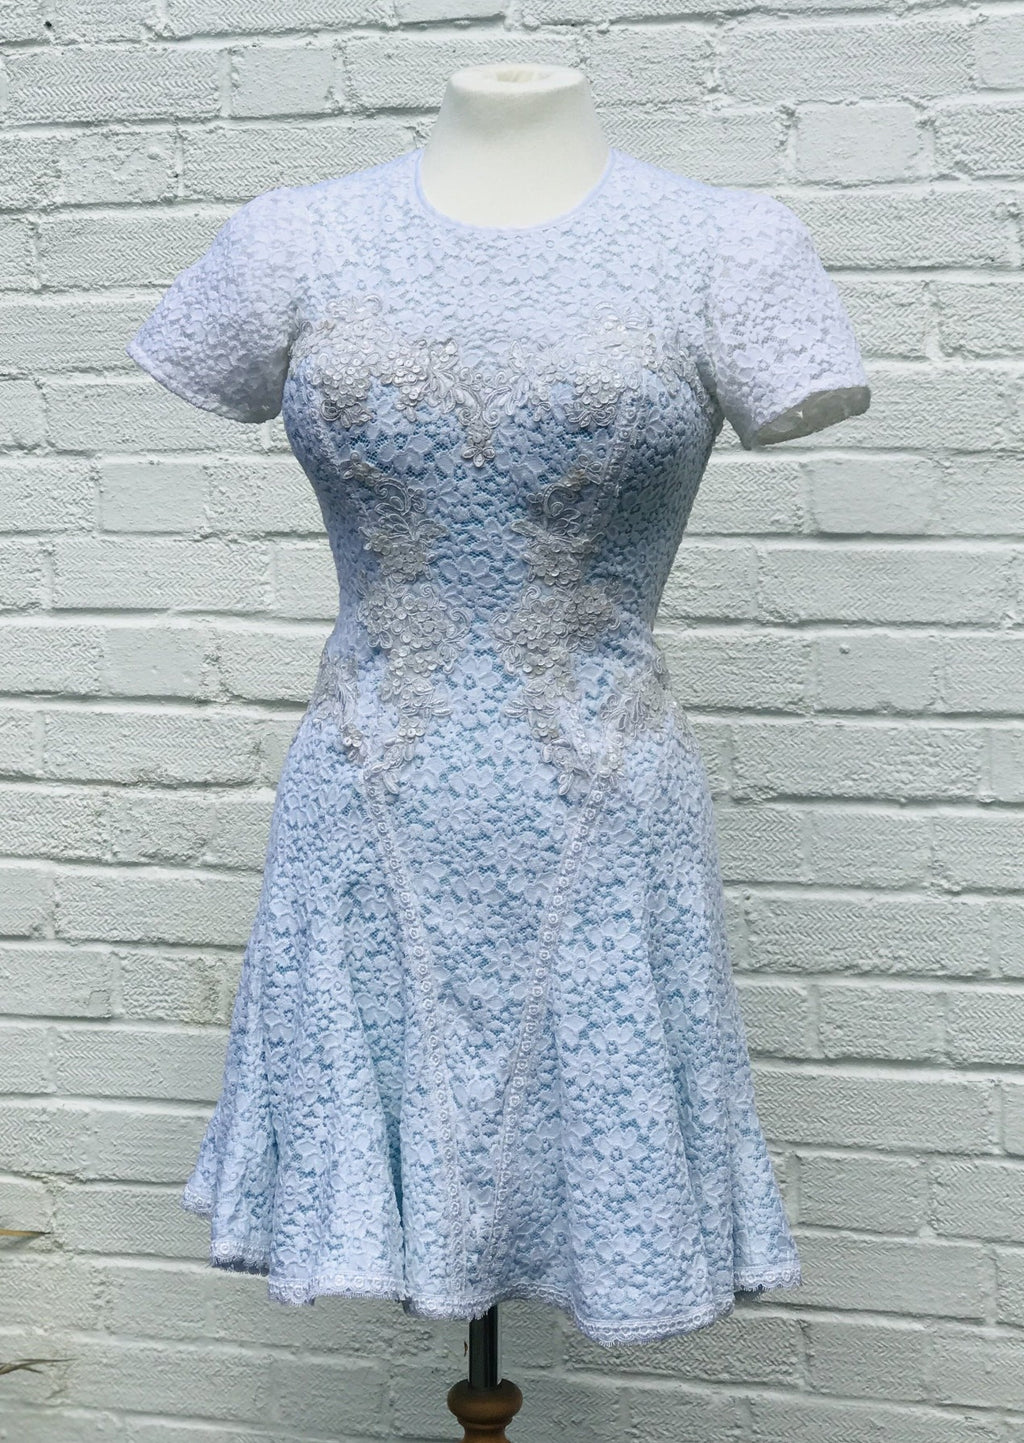 Vintage lace skater-style dress - Lucindas on-line